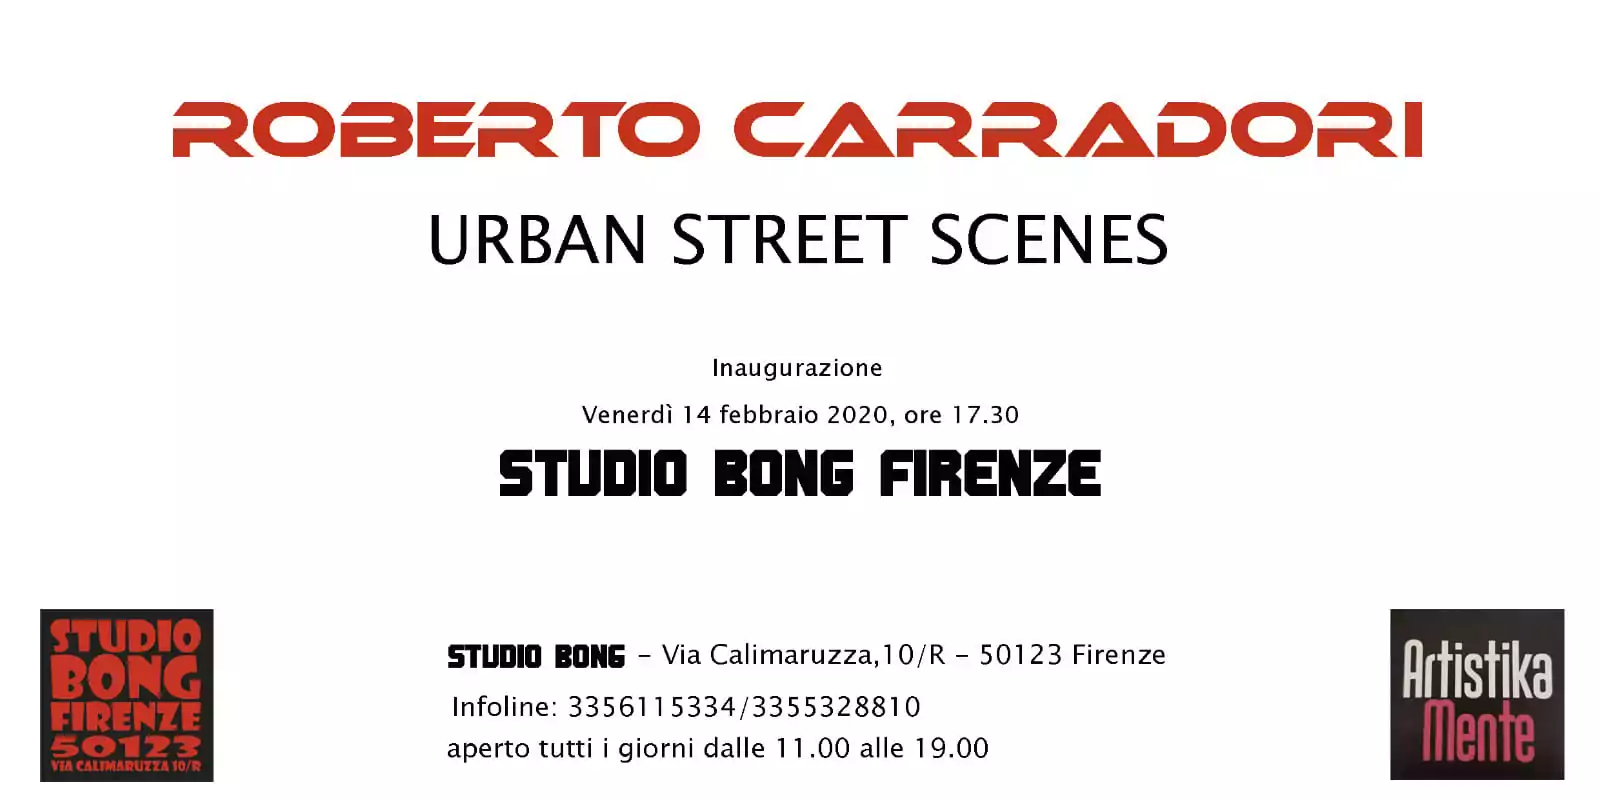 ROBERTO CARRADORI, "URBAN STREET SCENES"